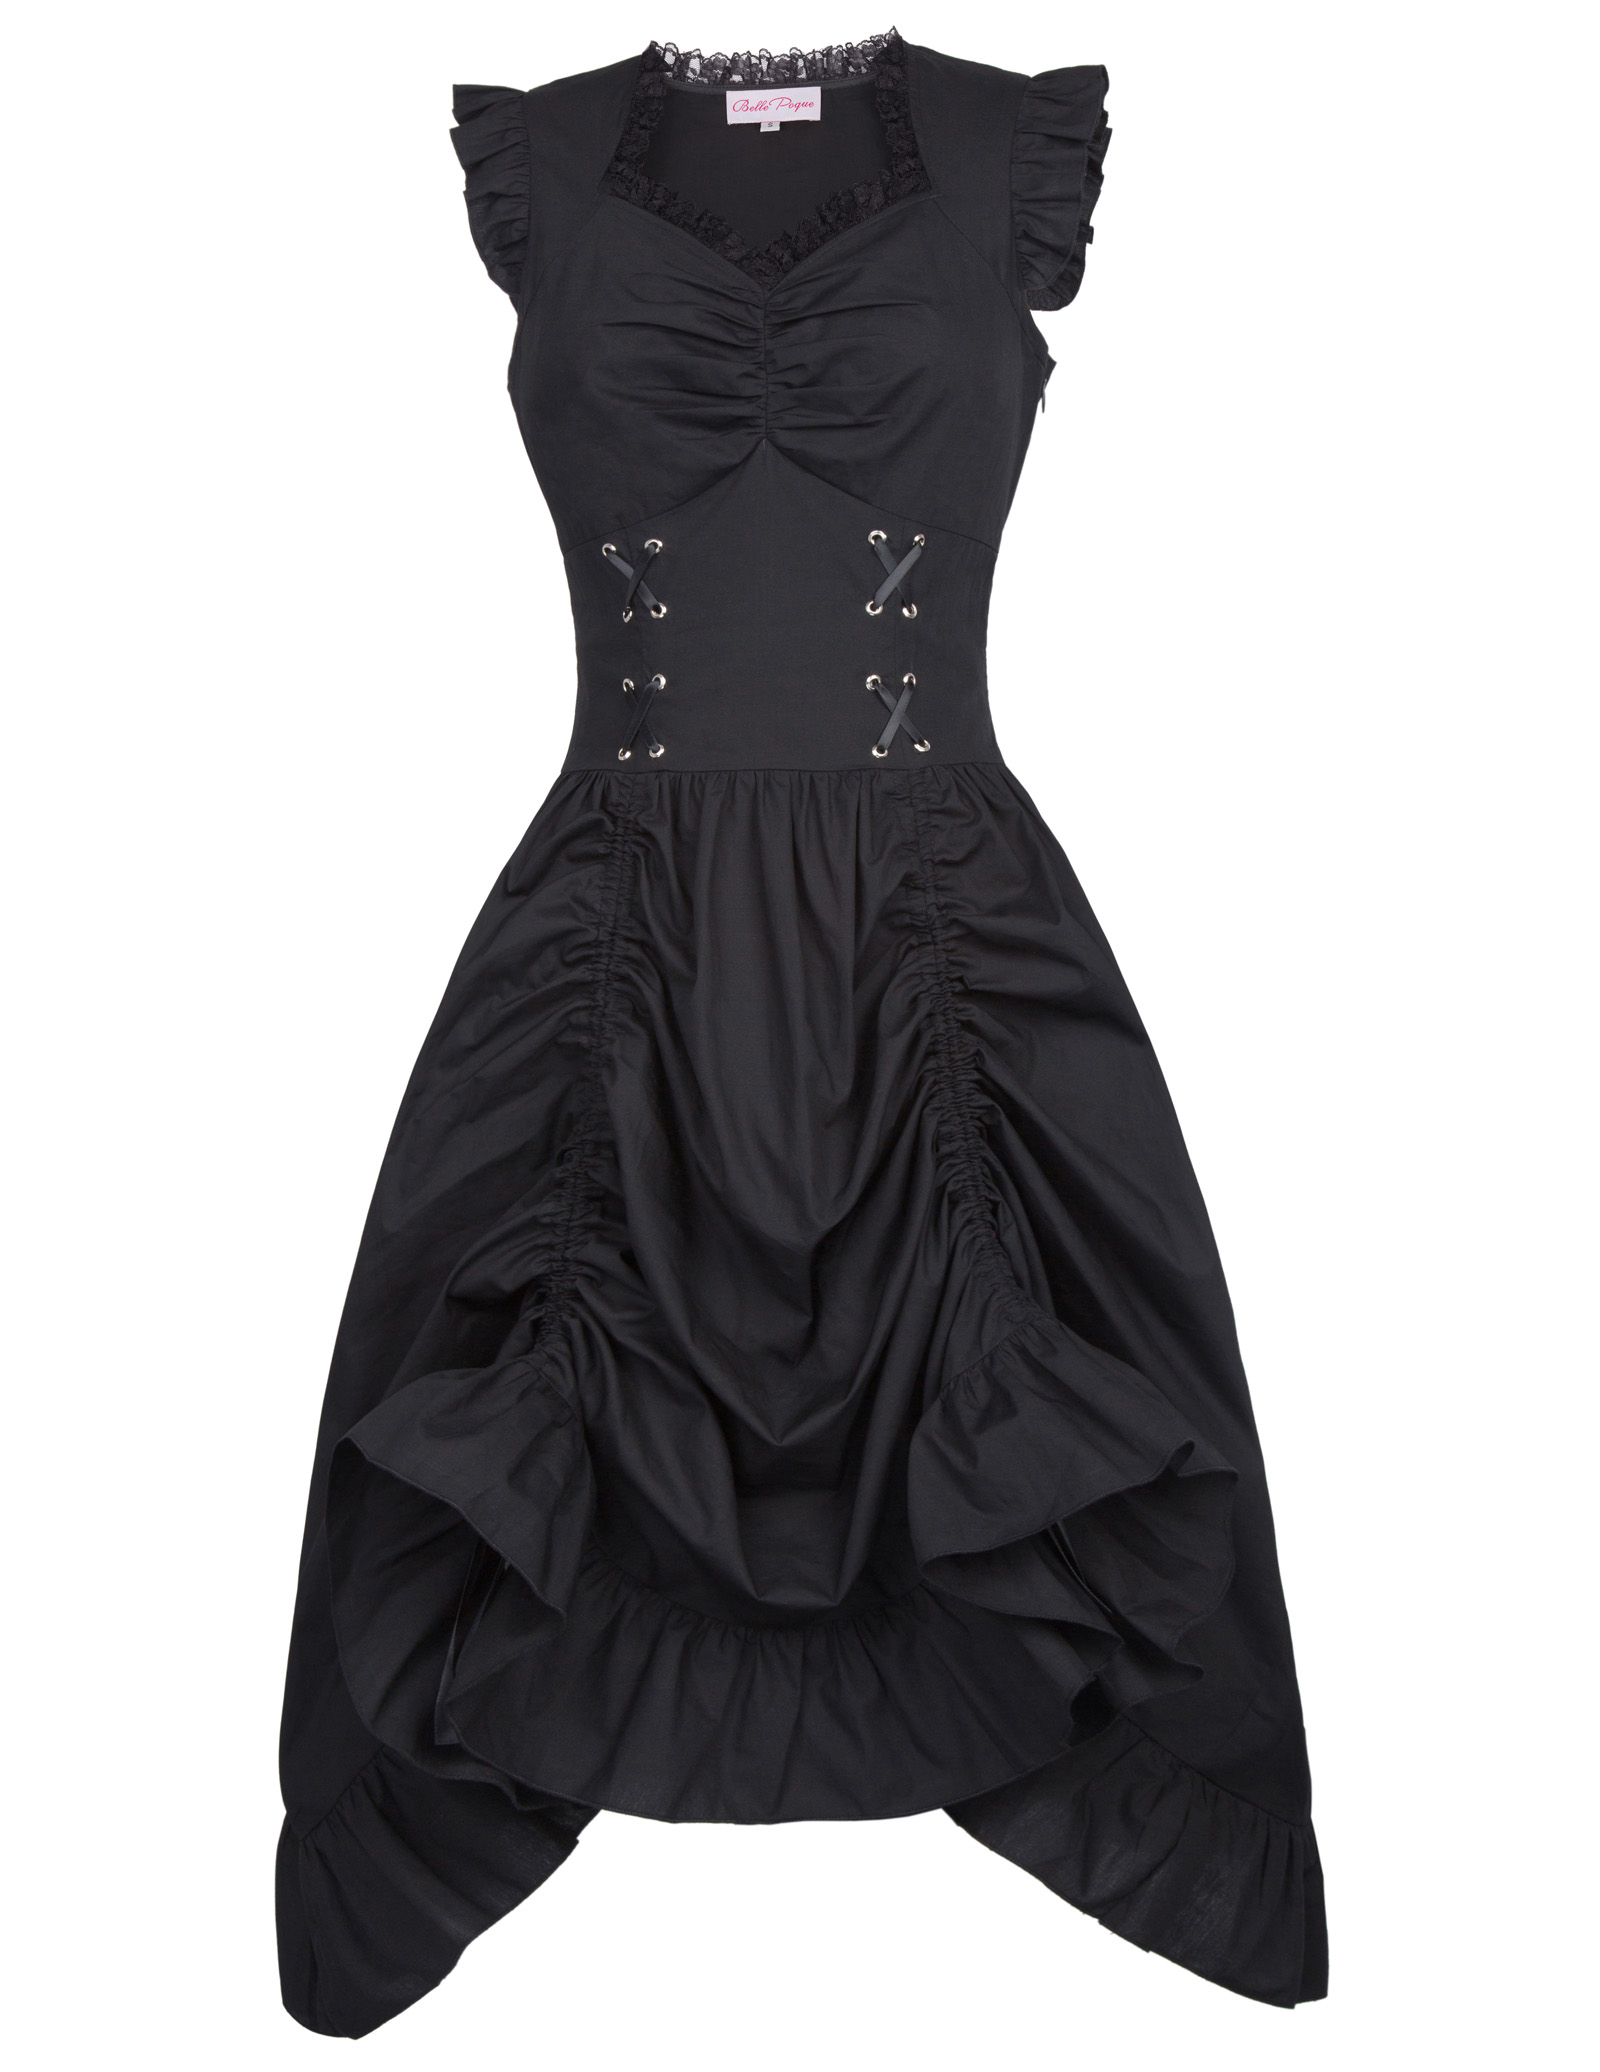 Black Women's Steampunk Rock Gothic Victoria Lace Dress